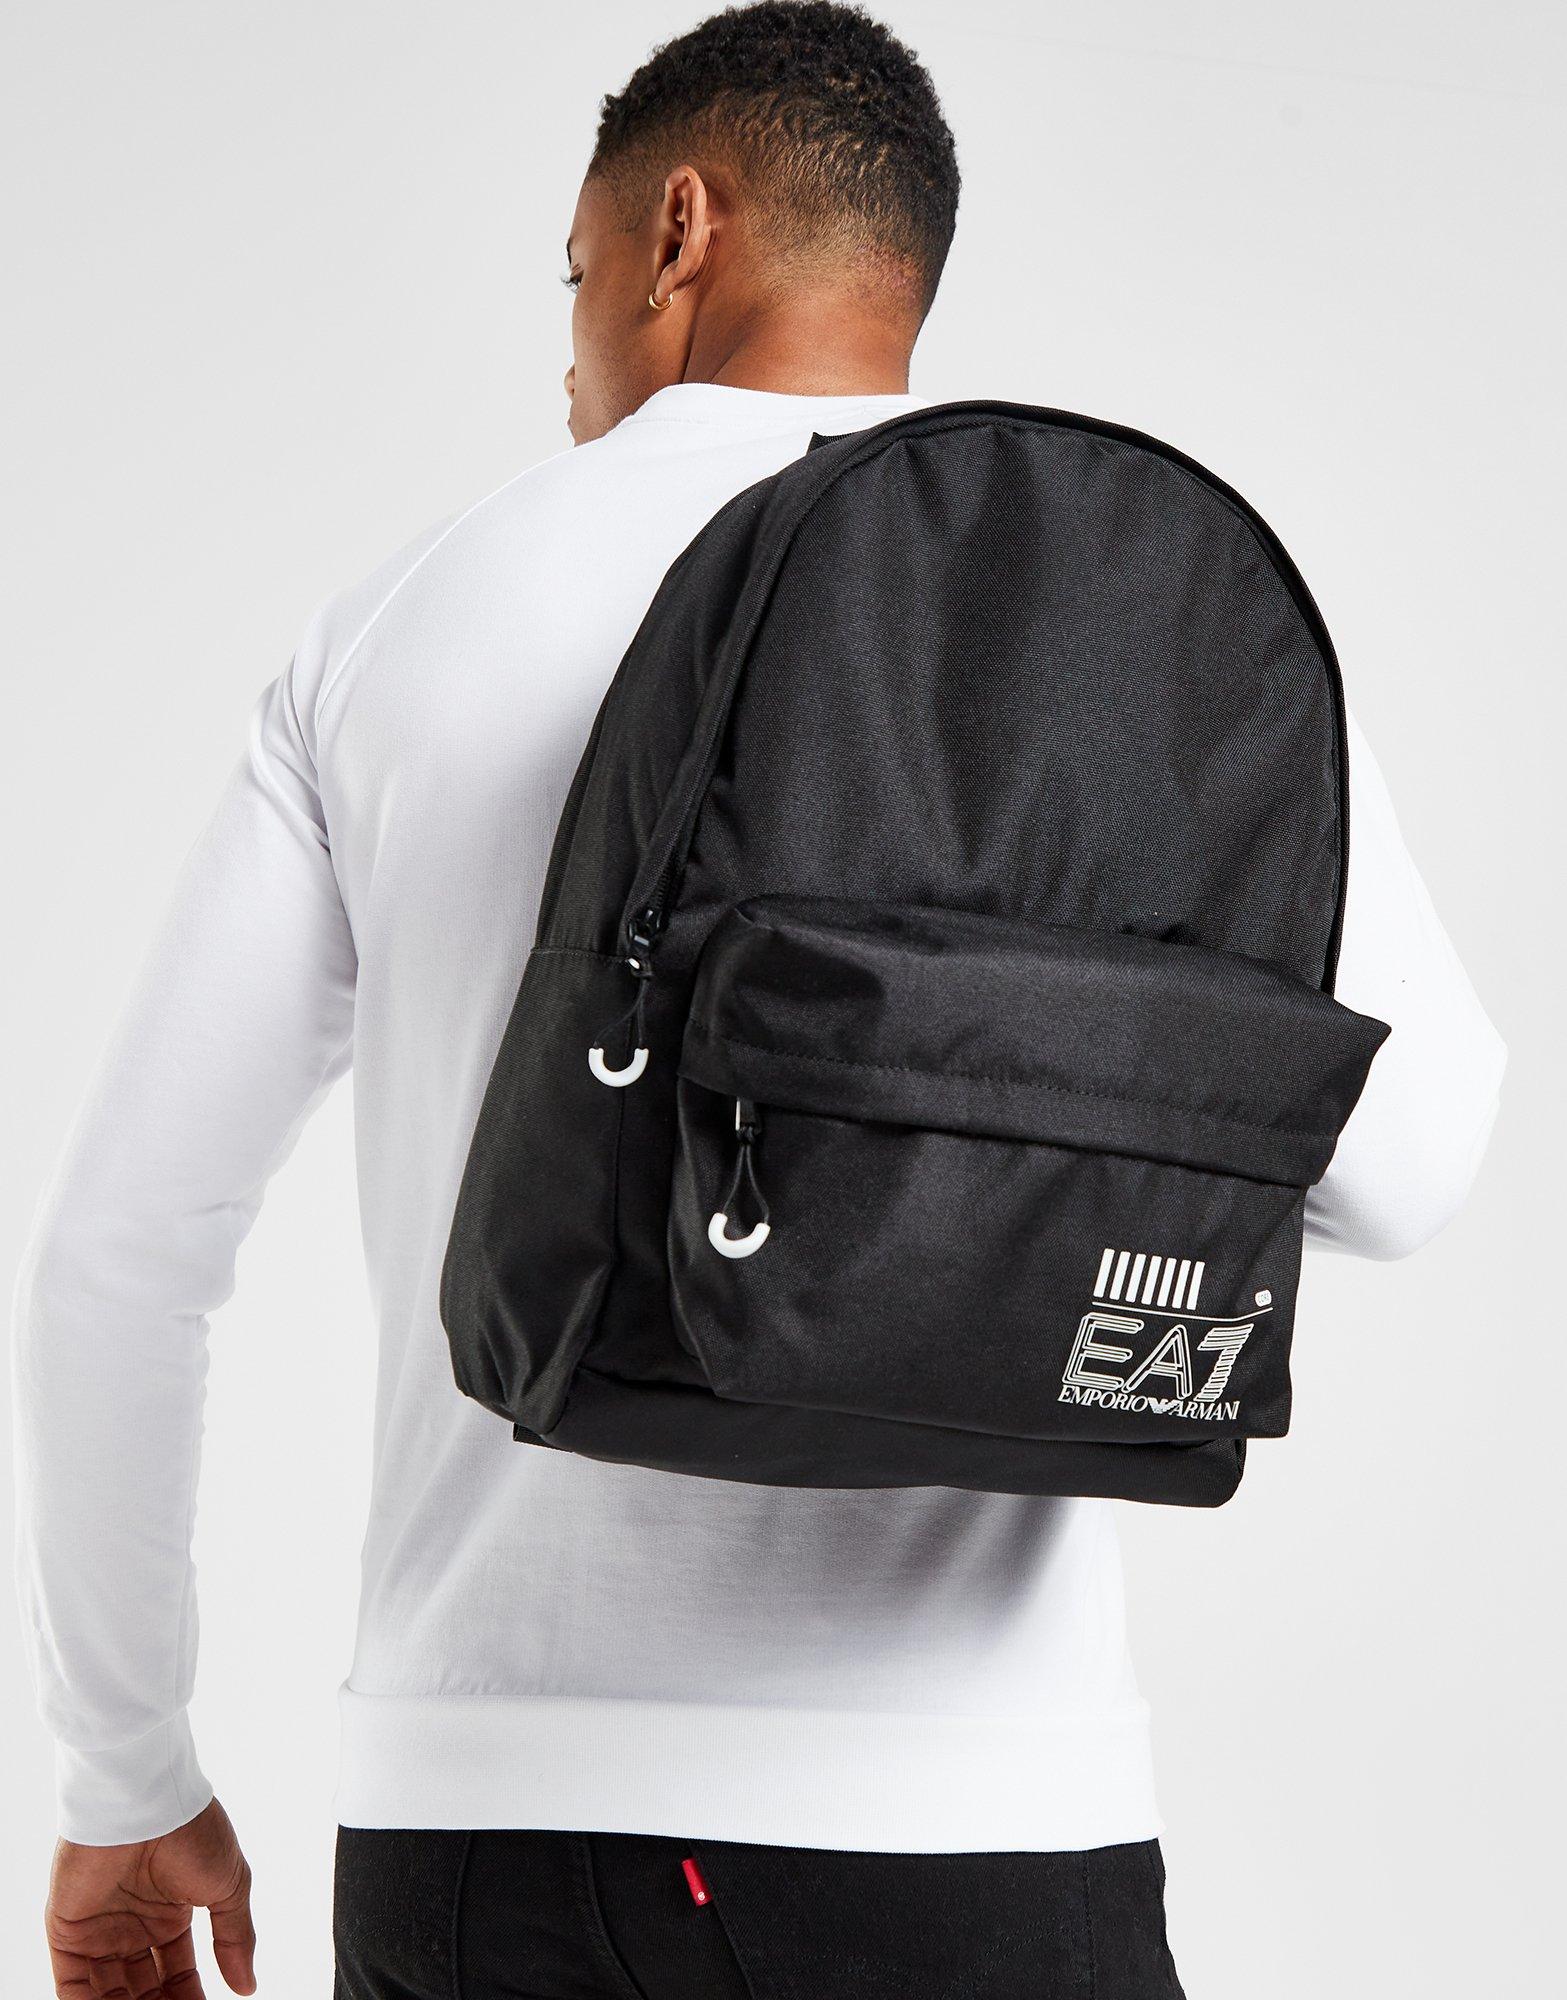 Armani EA7 Core Backpack - JD Sports